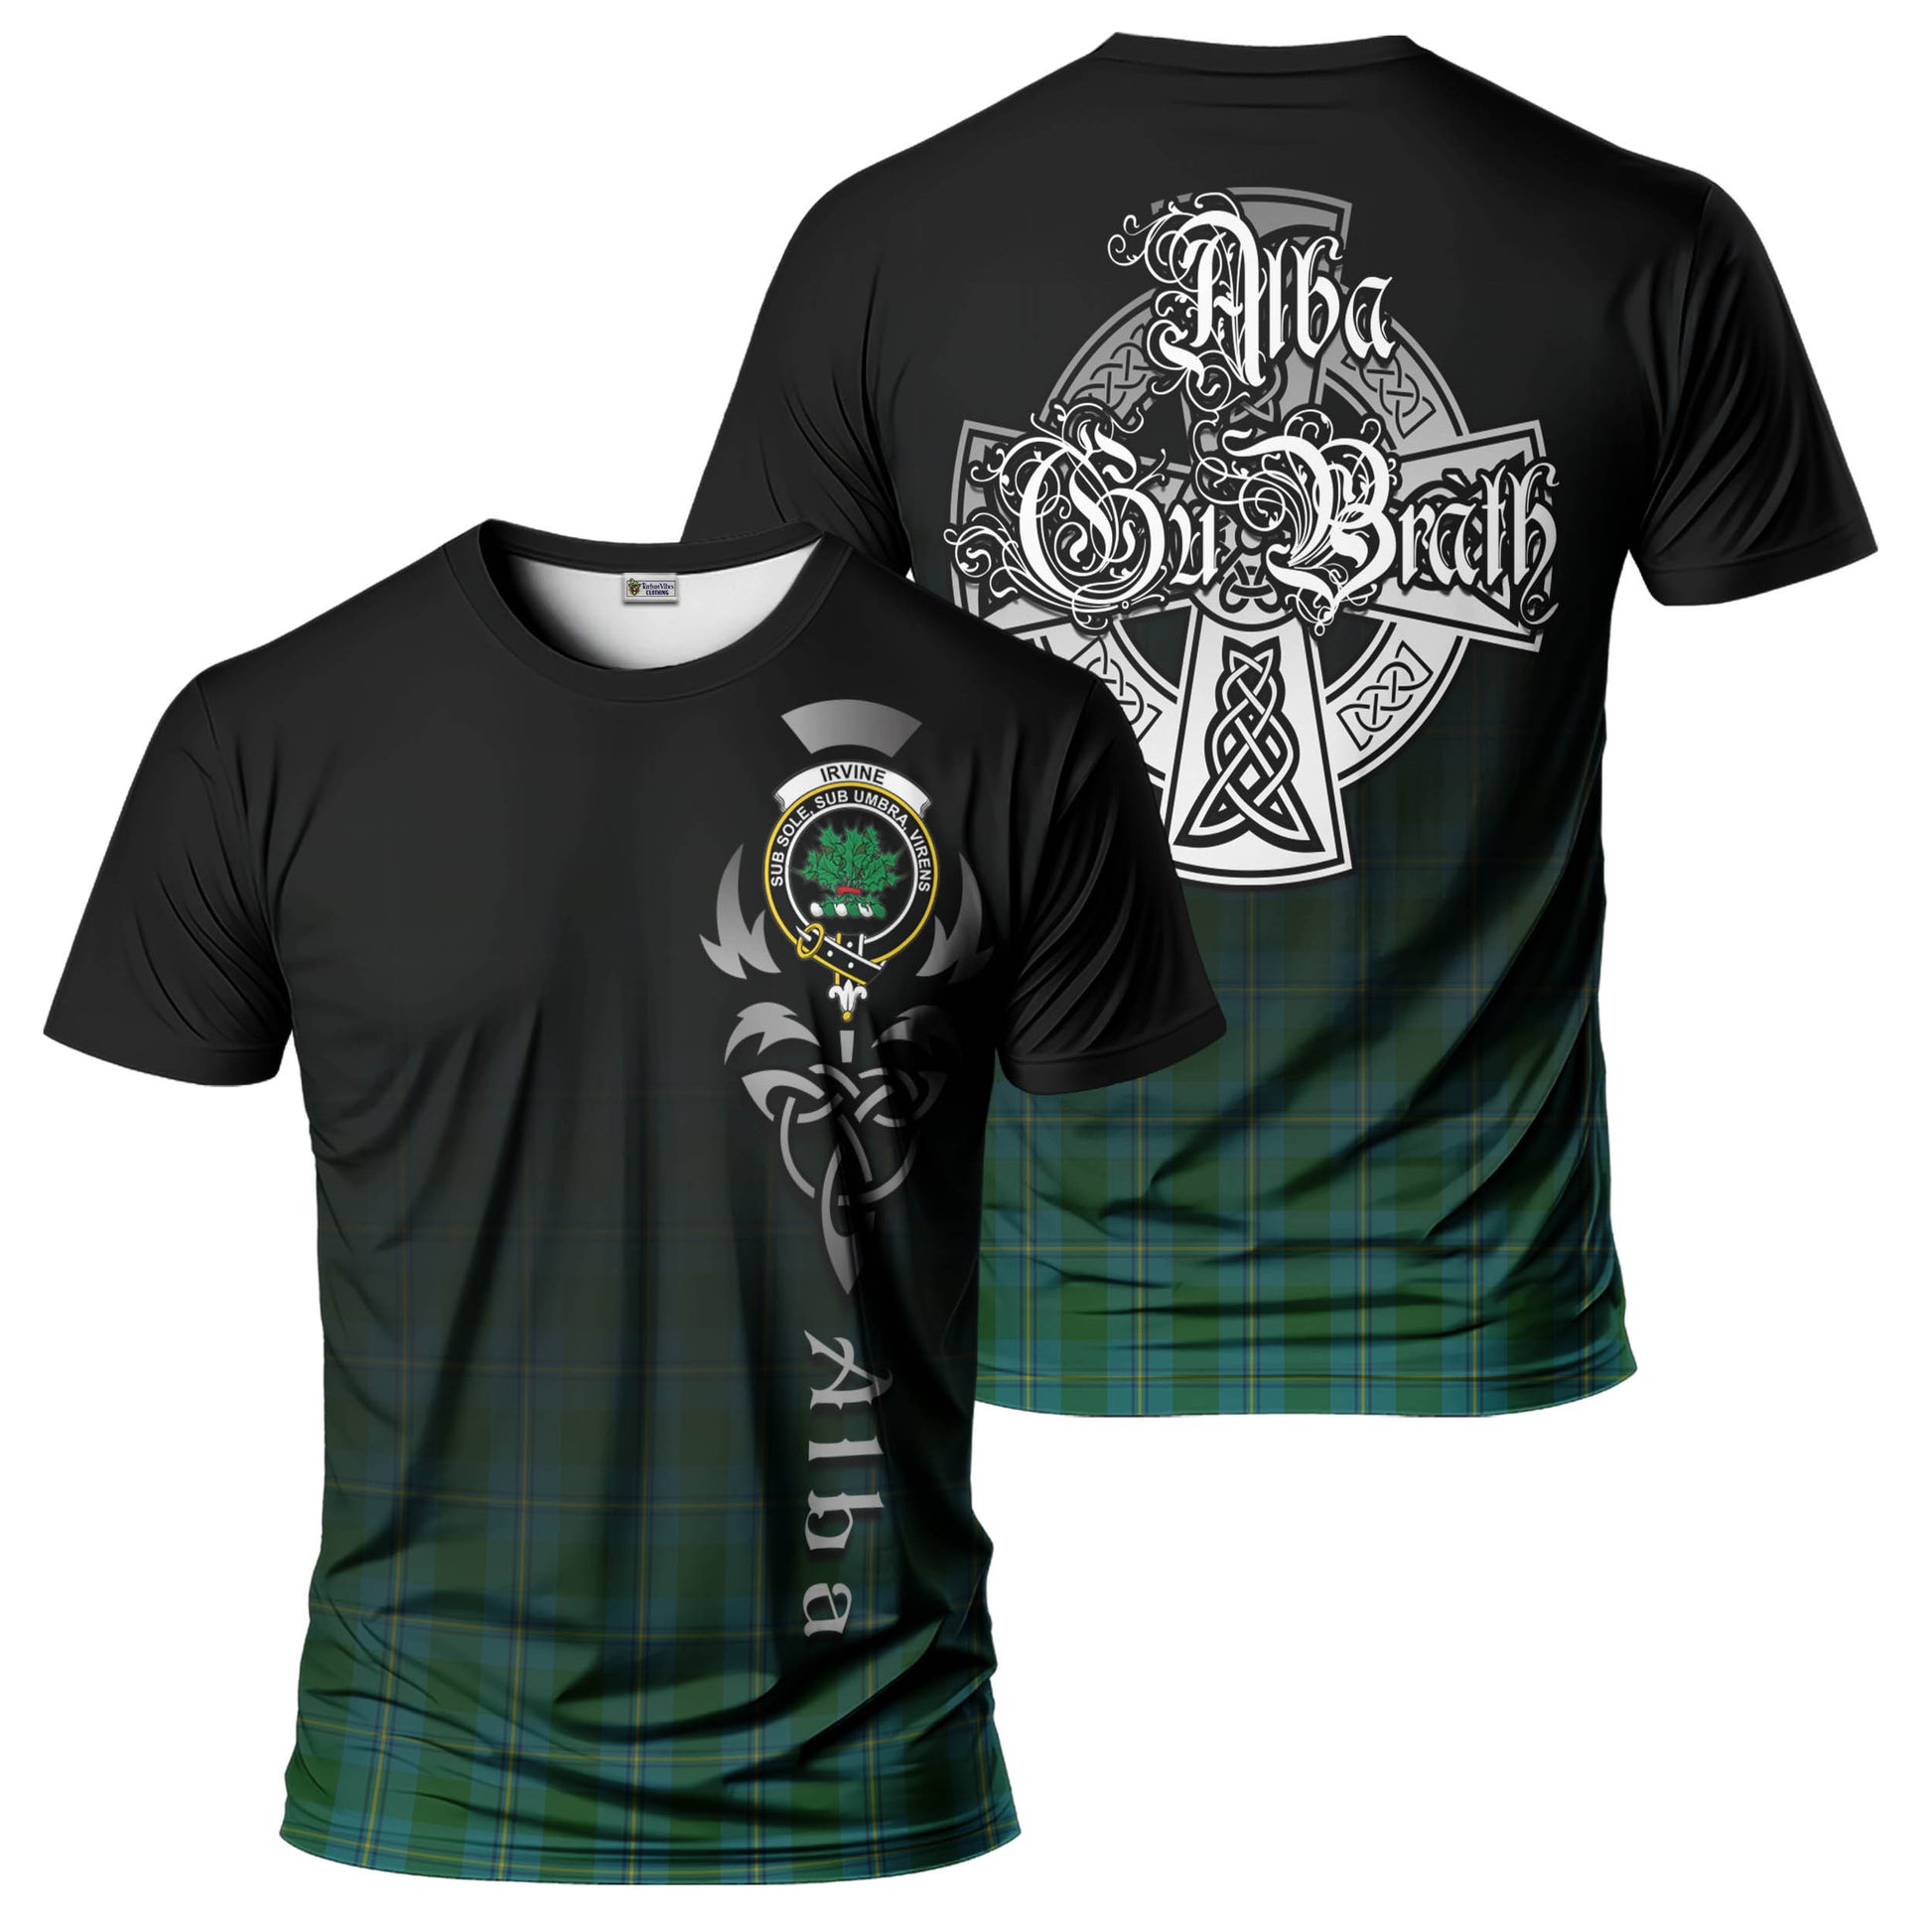 Tartan Vibes Clothing Irvine of Bonshaw Tartan T-Shirt Featuring Alba Gu Brath Family Crest Celtic Inspired